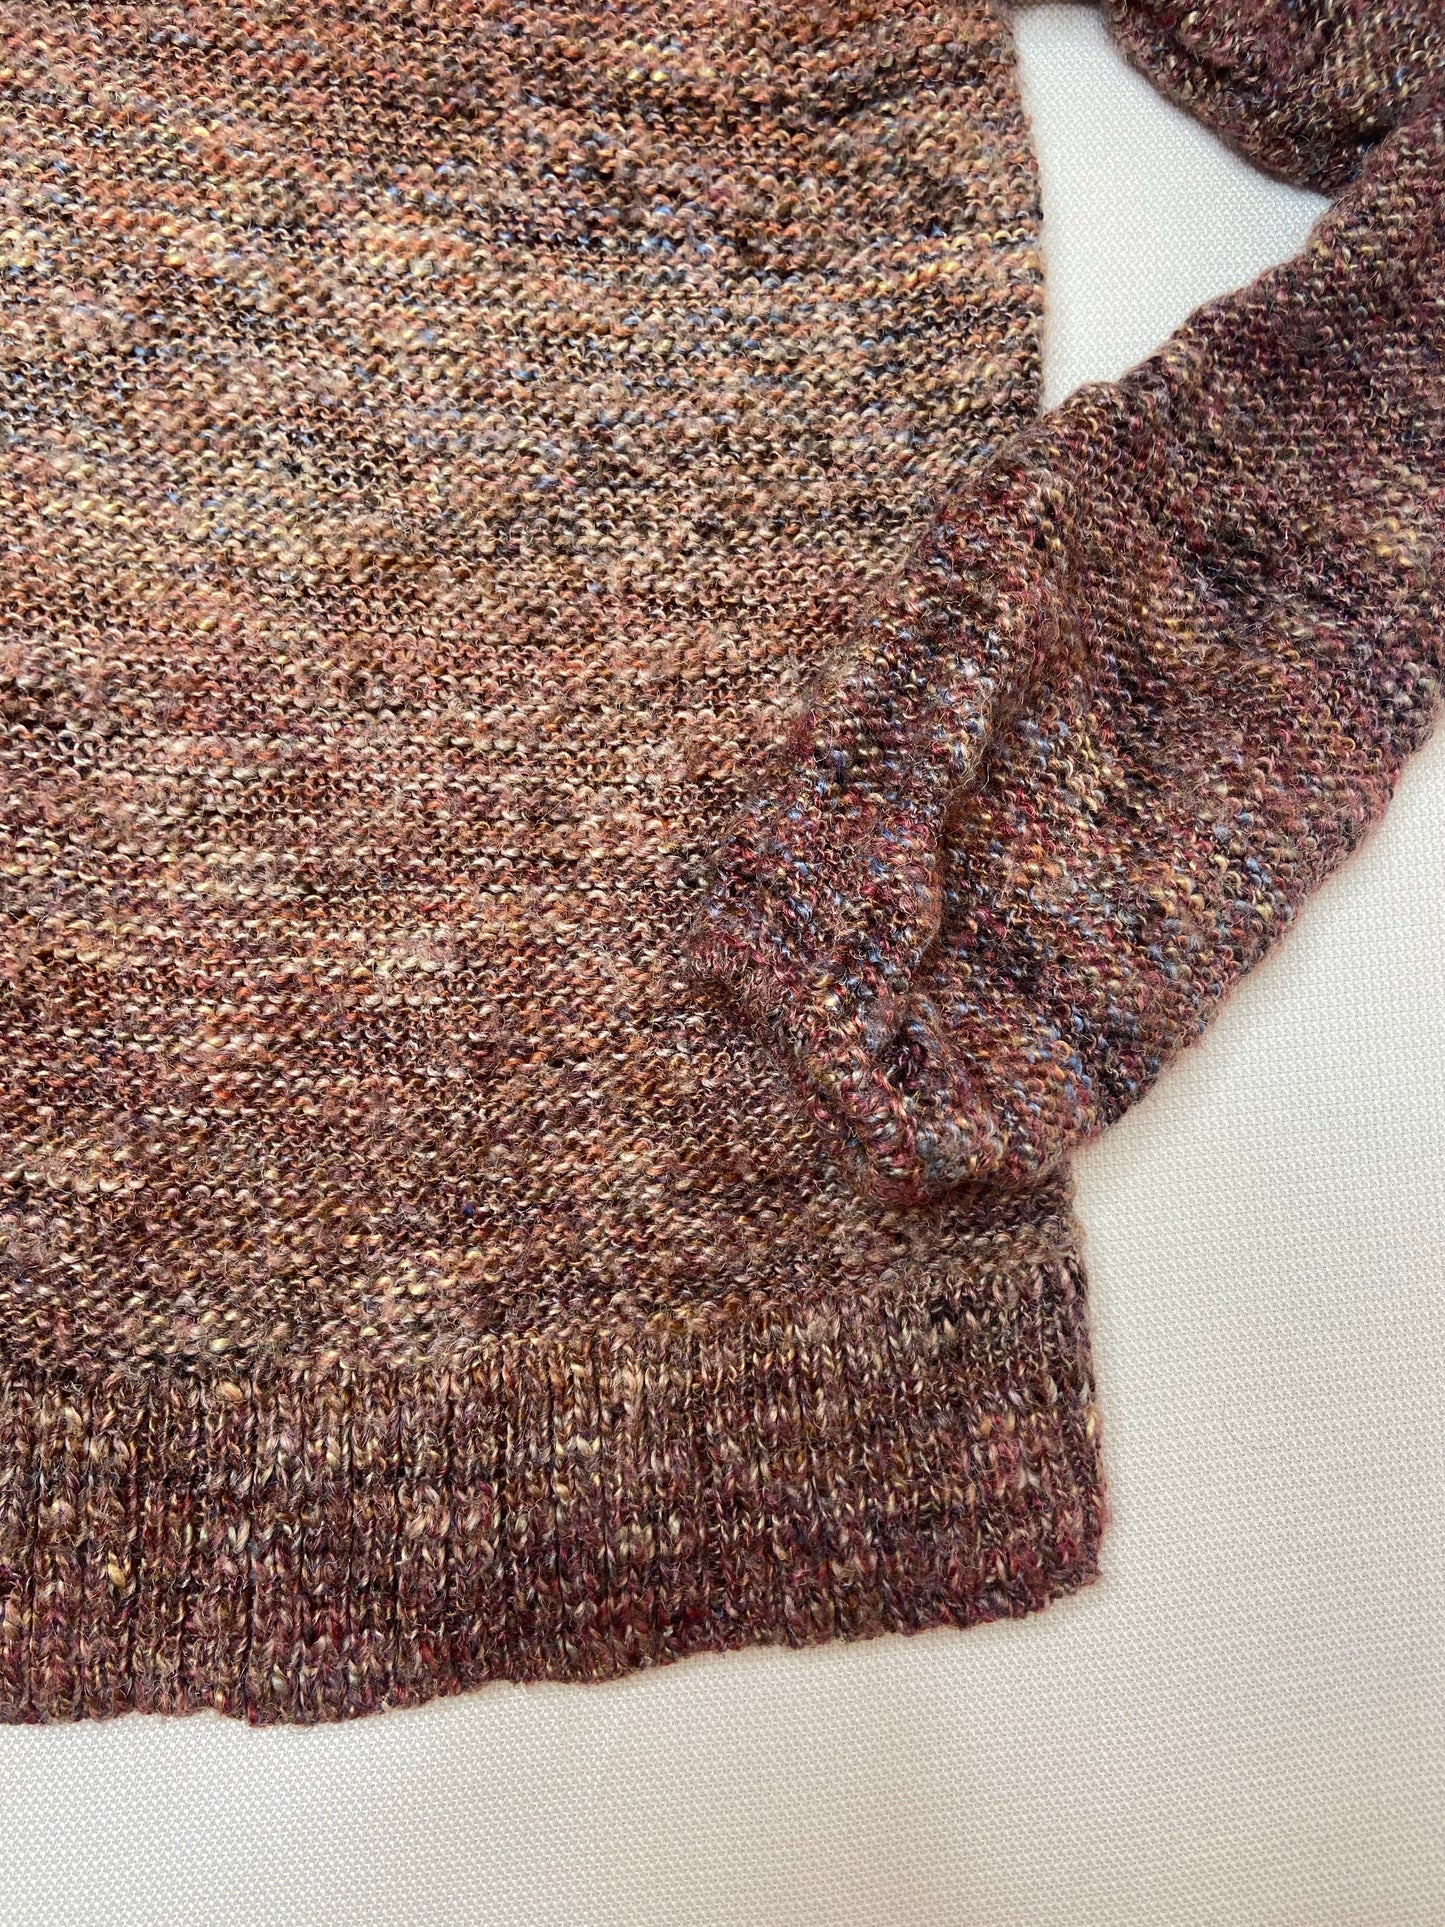 Multi-colored Tight Cuffed Sweater- XS